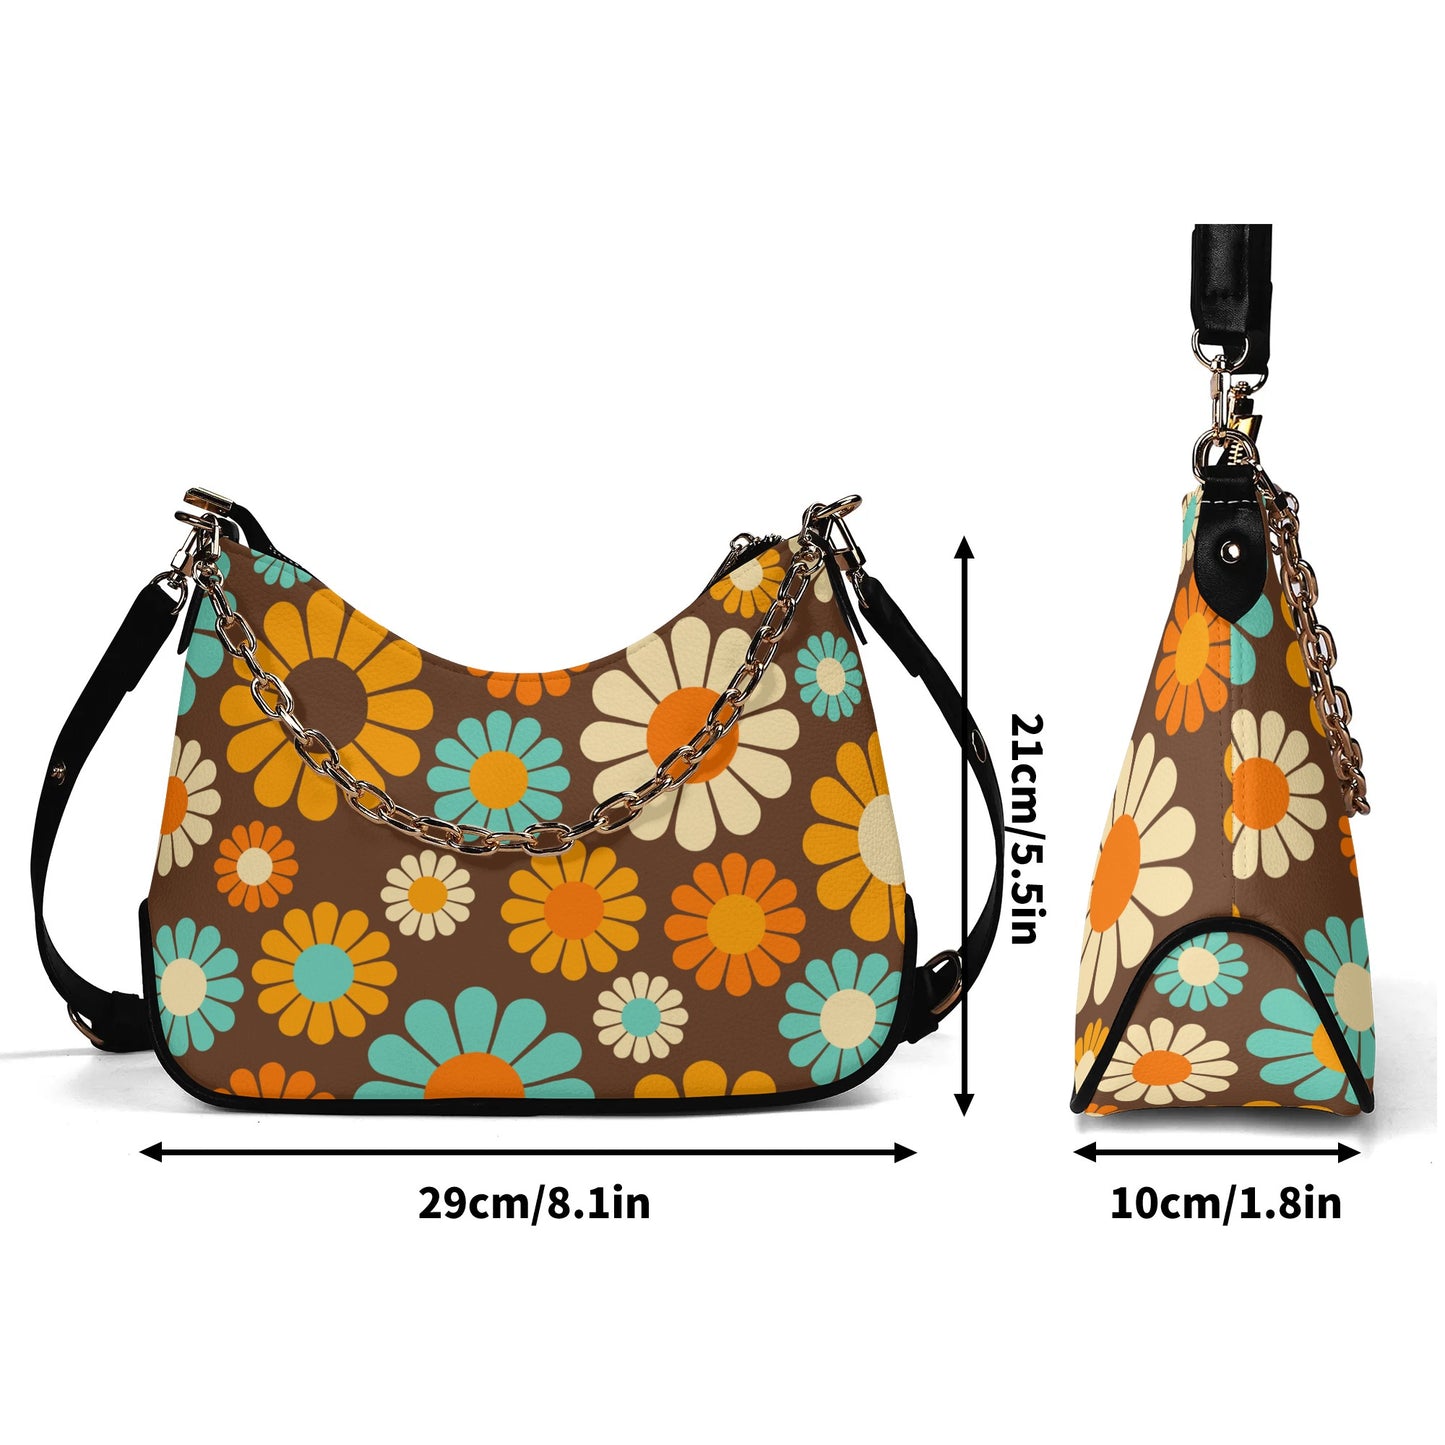 Vintage Handbag Style, Mod bag, PU leather Bag, Retro handbag, Brown Floral Handbag, 60s 70s Floral Purse, 70s inspired Cross body Boho Bag